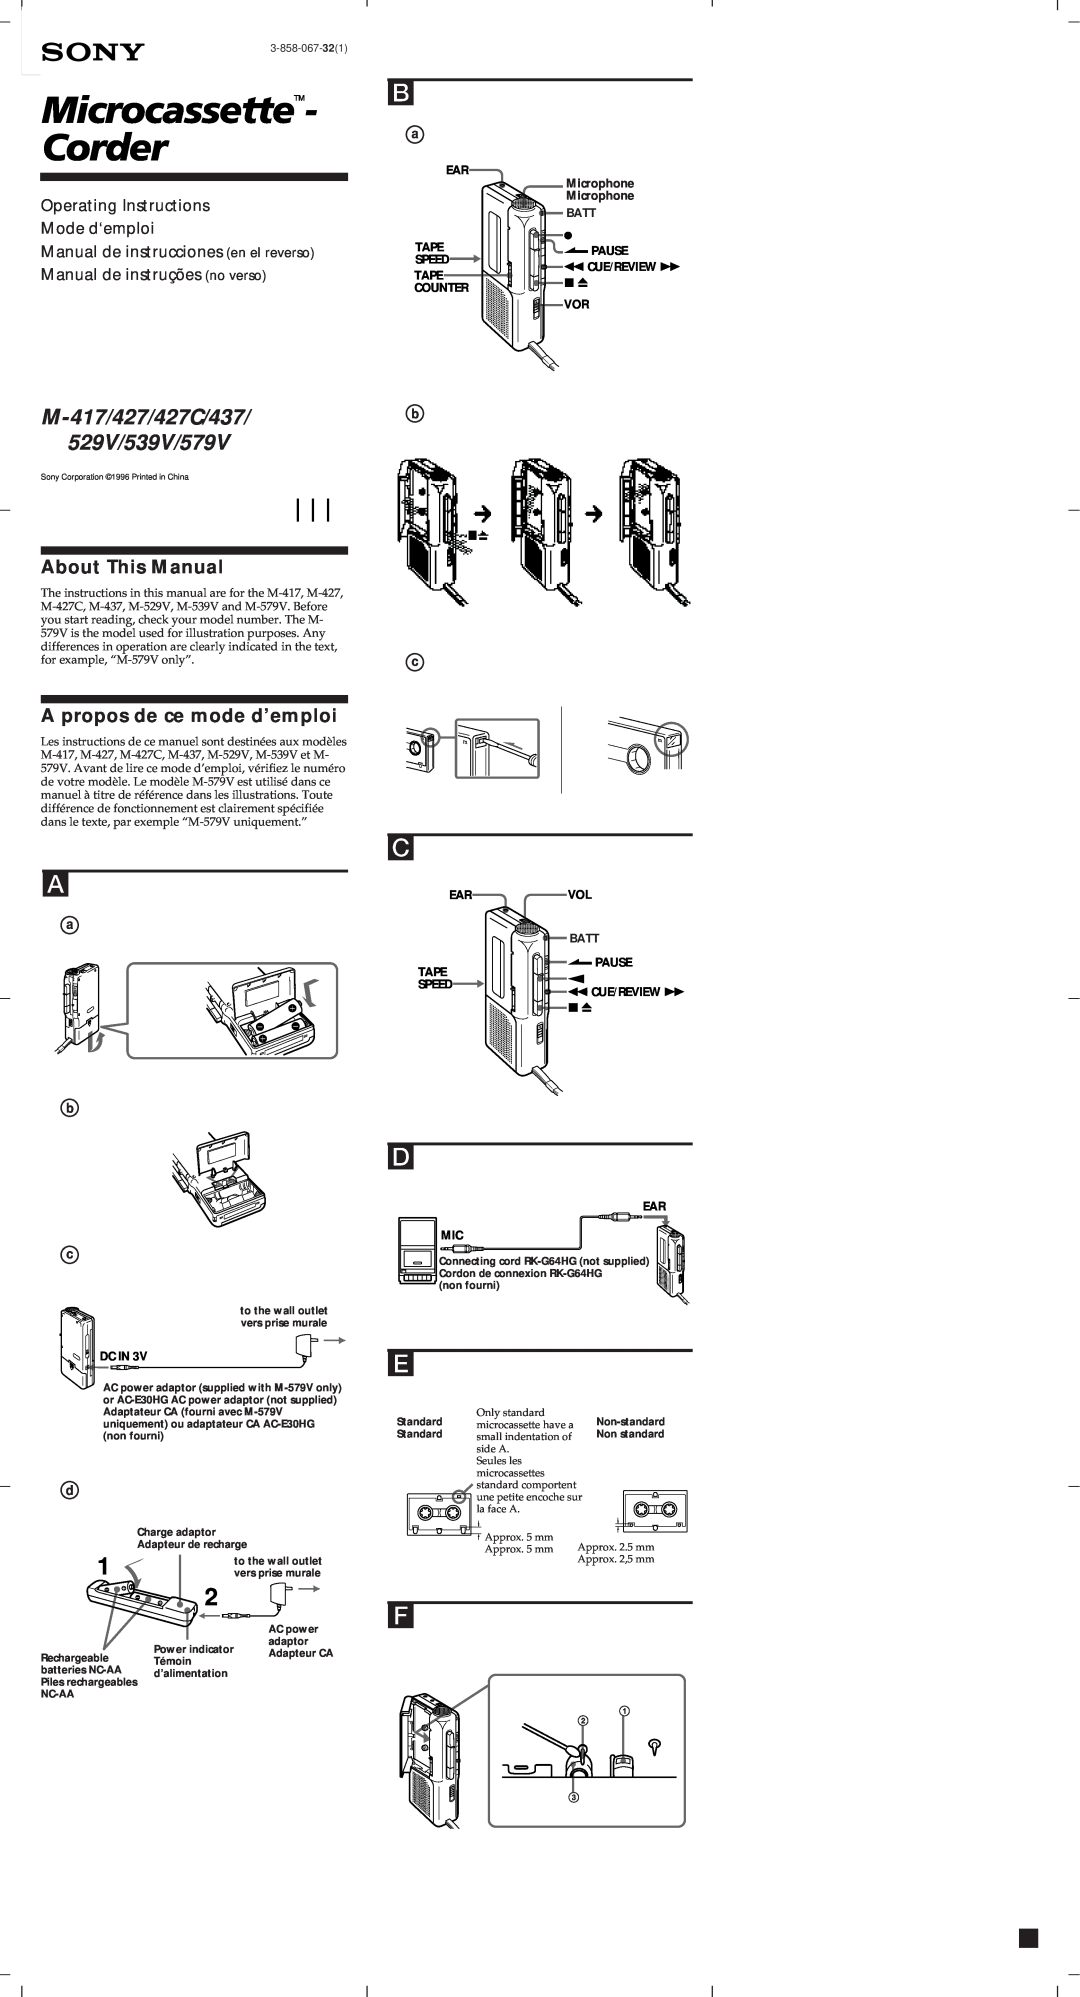 Sony operating instructions About This Manual, A propos de ce mode d’emploi, M-417/427/427C/437/ 529V/539V/579V 